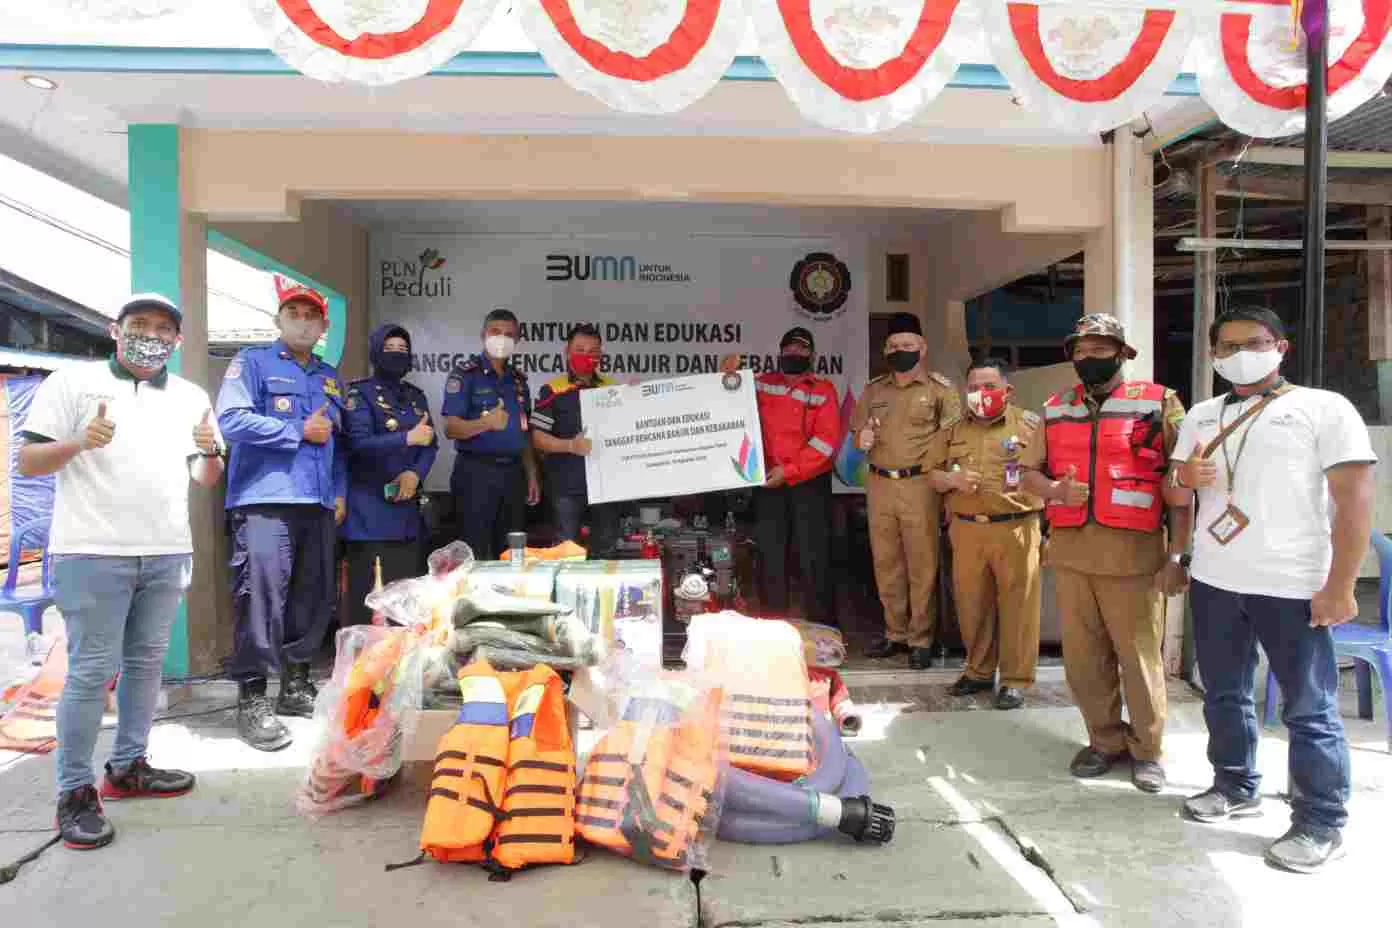 TANGGAP: PLN UIP Kalbagtim menyalurkan bantuan dan memberikan edukasi kepada relawan bencana banjir dan kebakaran di Kelurahan Sidodadi, Samarinda kemarin.